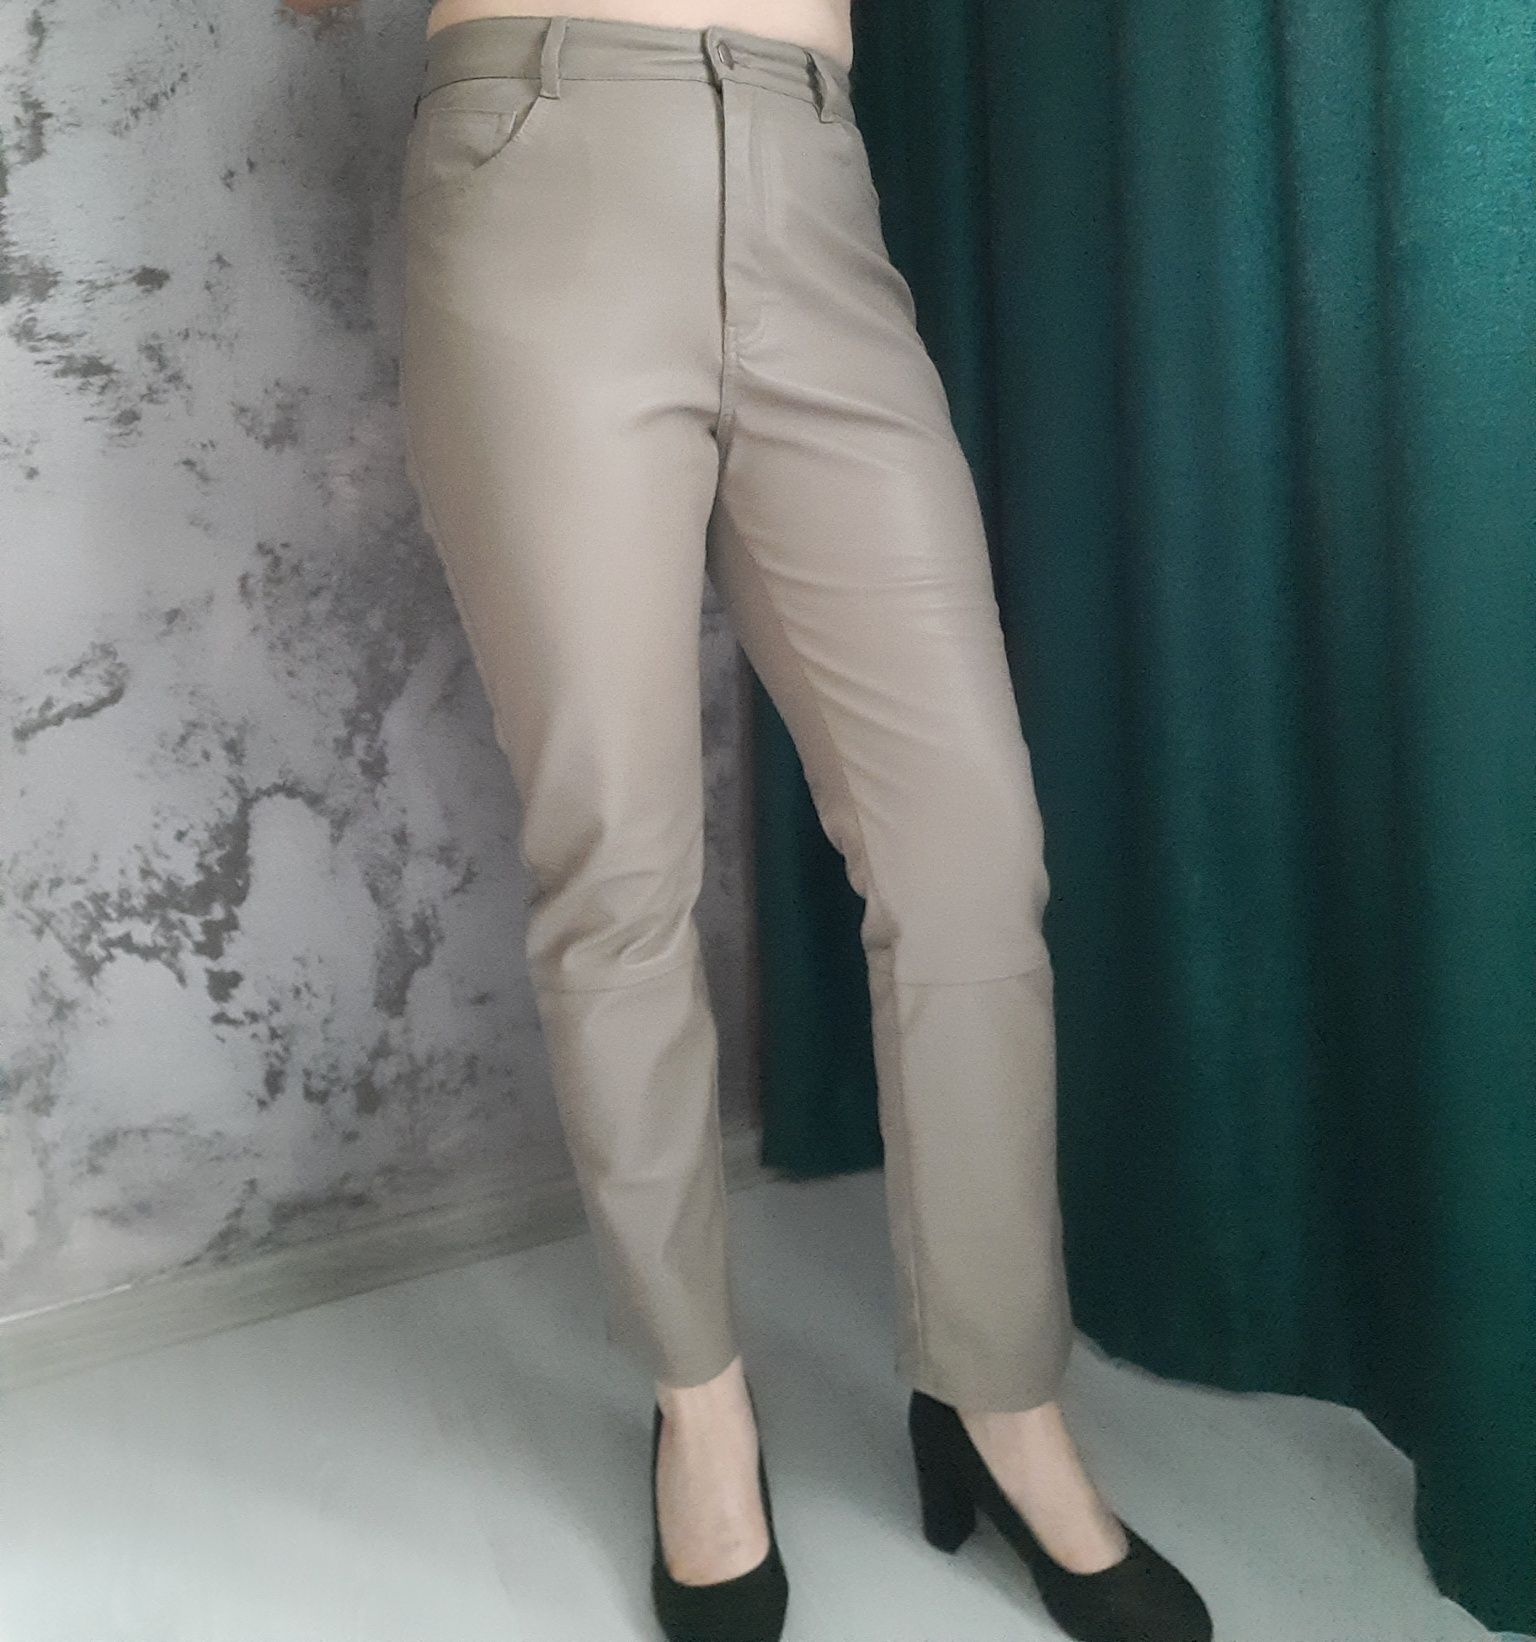 Pantalon piele, marca H&M, achiziție UK, mărimea L/40